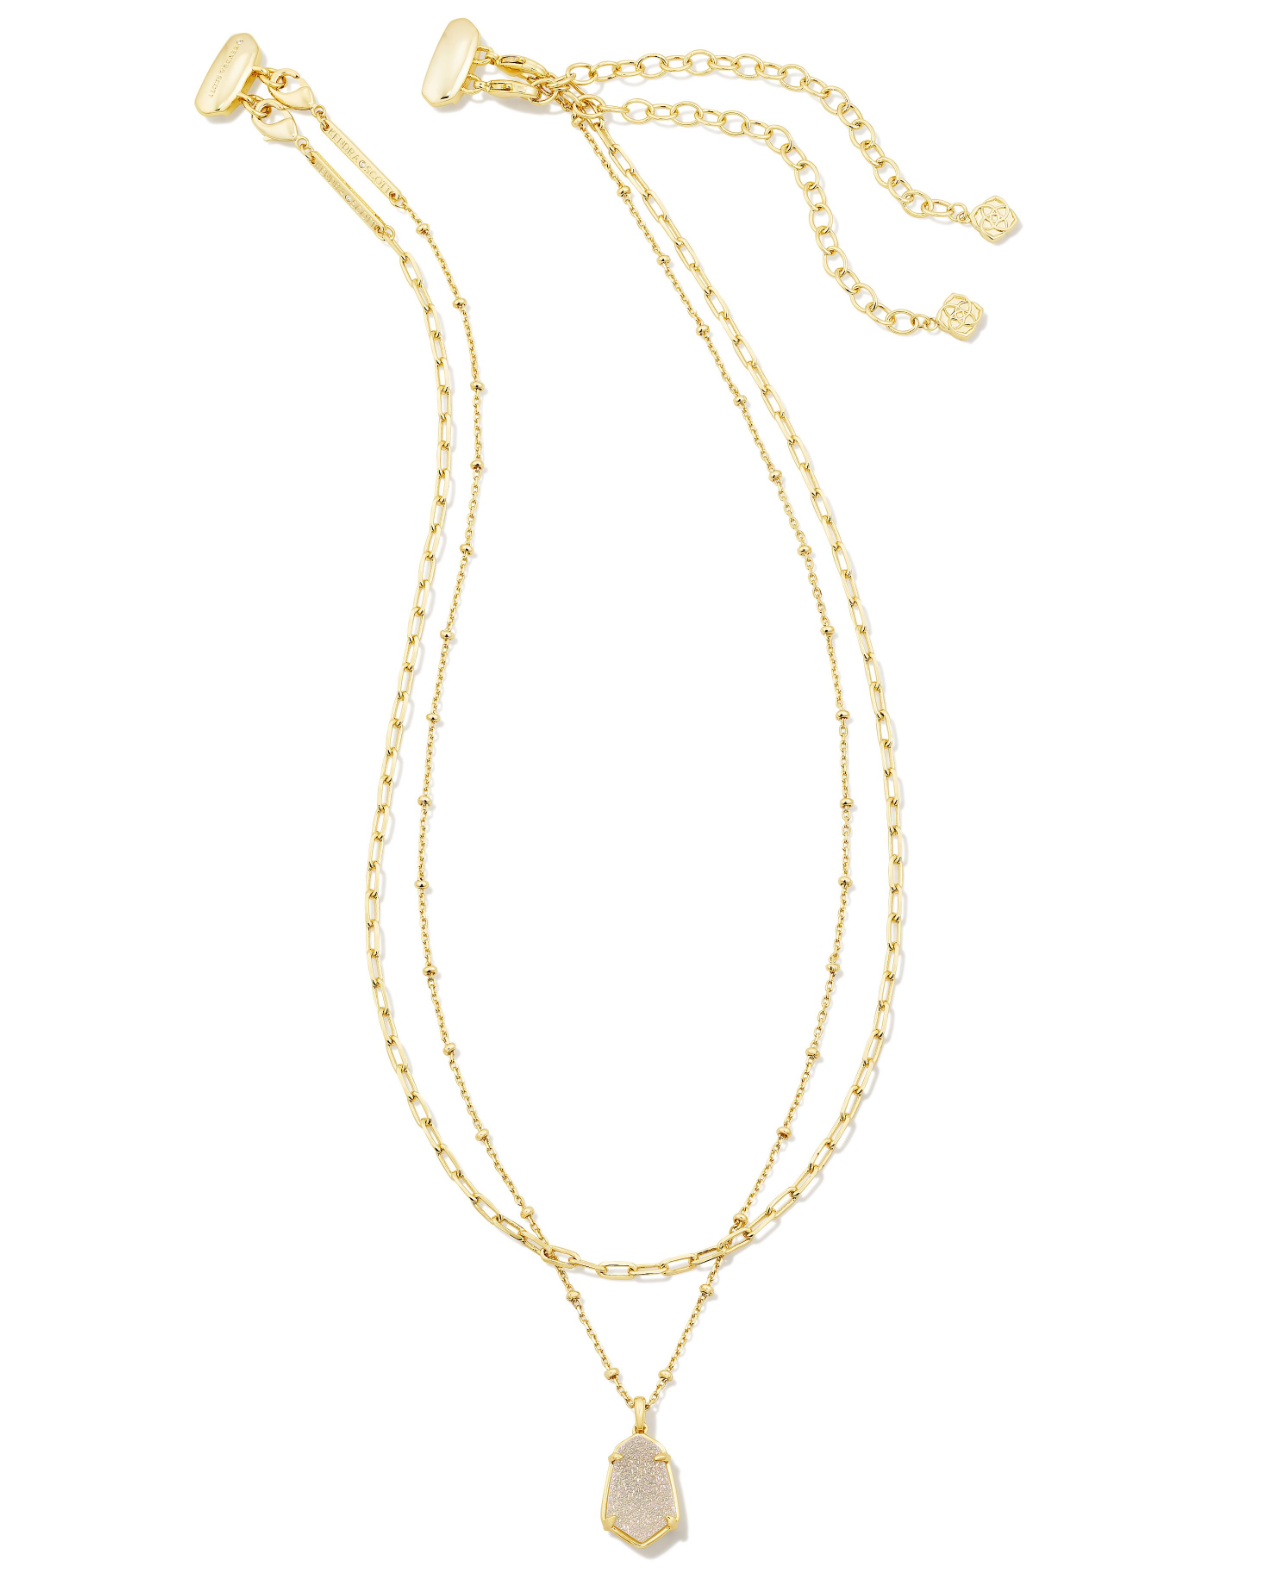 Alexandria Gold Multi Strand Necklace in Iridescent Drusy | KENDRA SCOTT - The Street Boutique 